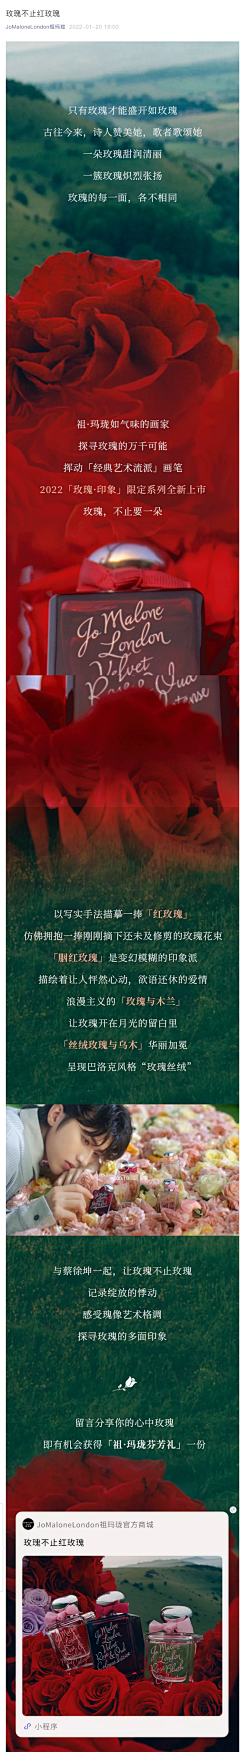 吉骁骁jixiaoxiao采集到wechat微信排版